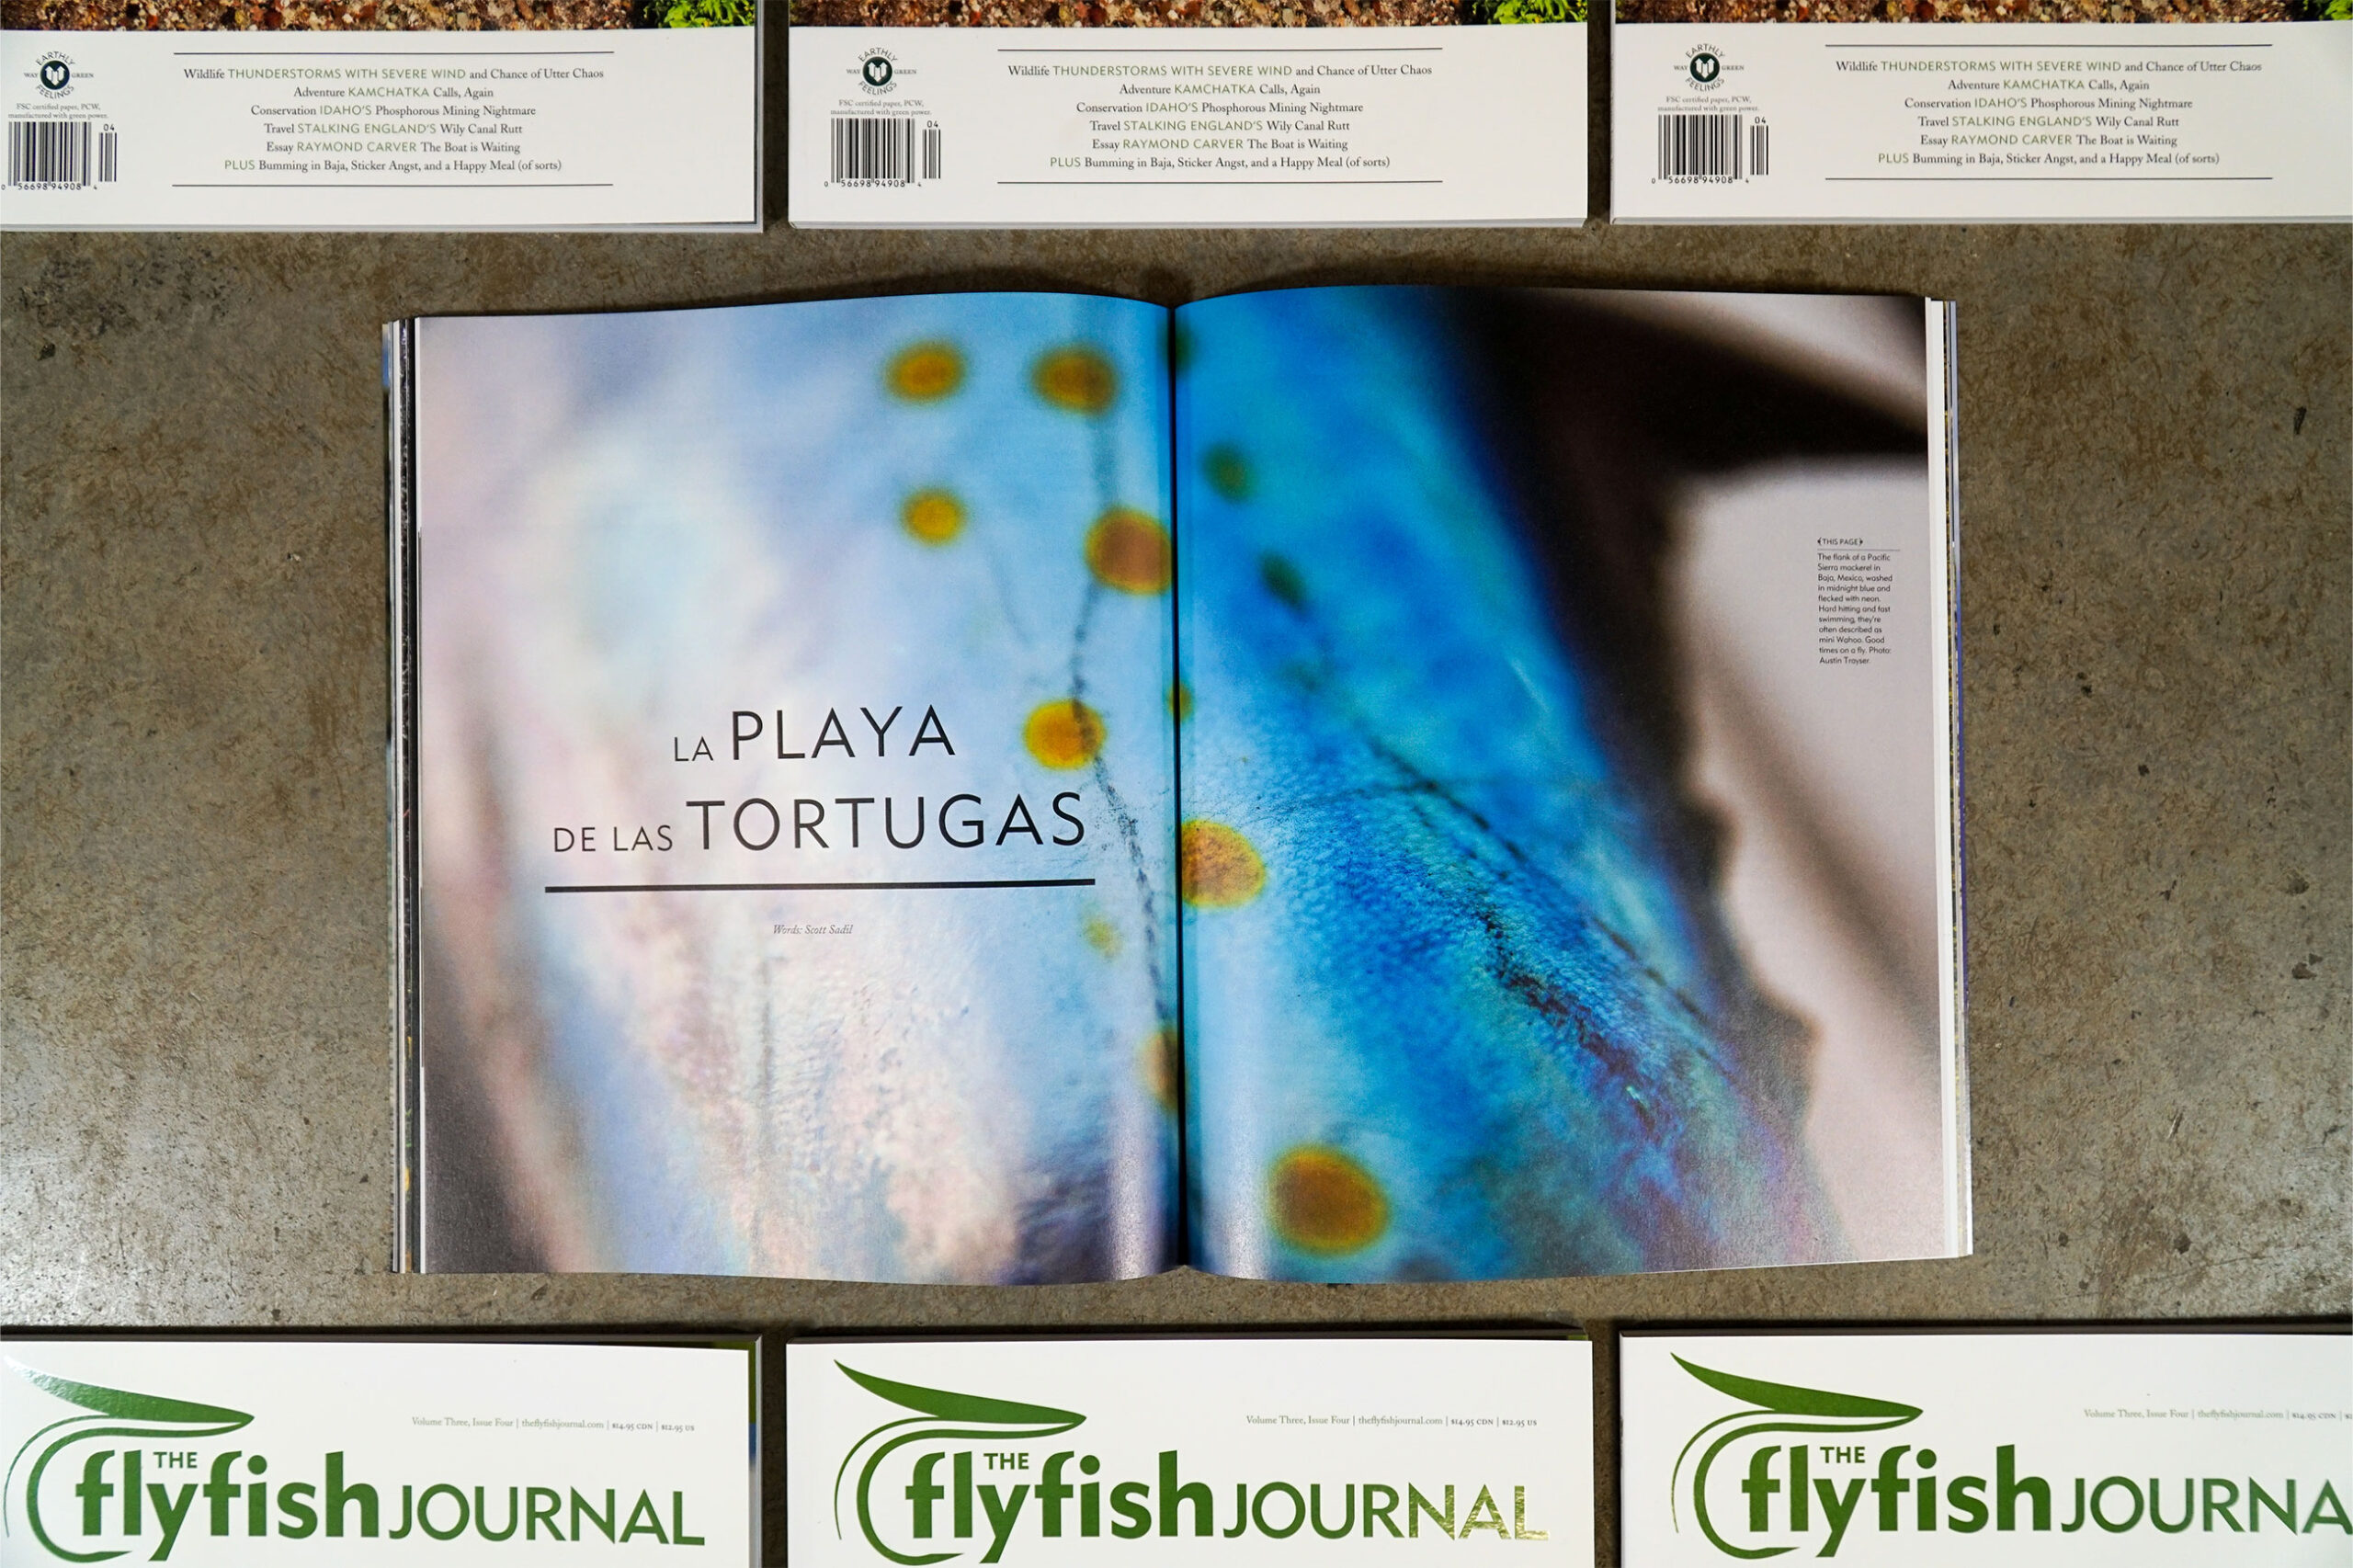 The Flyfish Journal Volume 3 Issue 4 Feature La Playa de las Tortugas